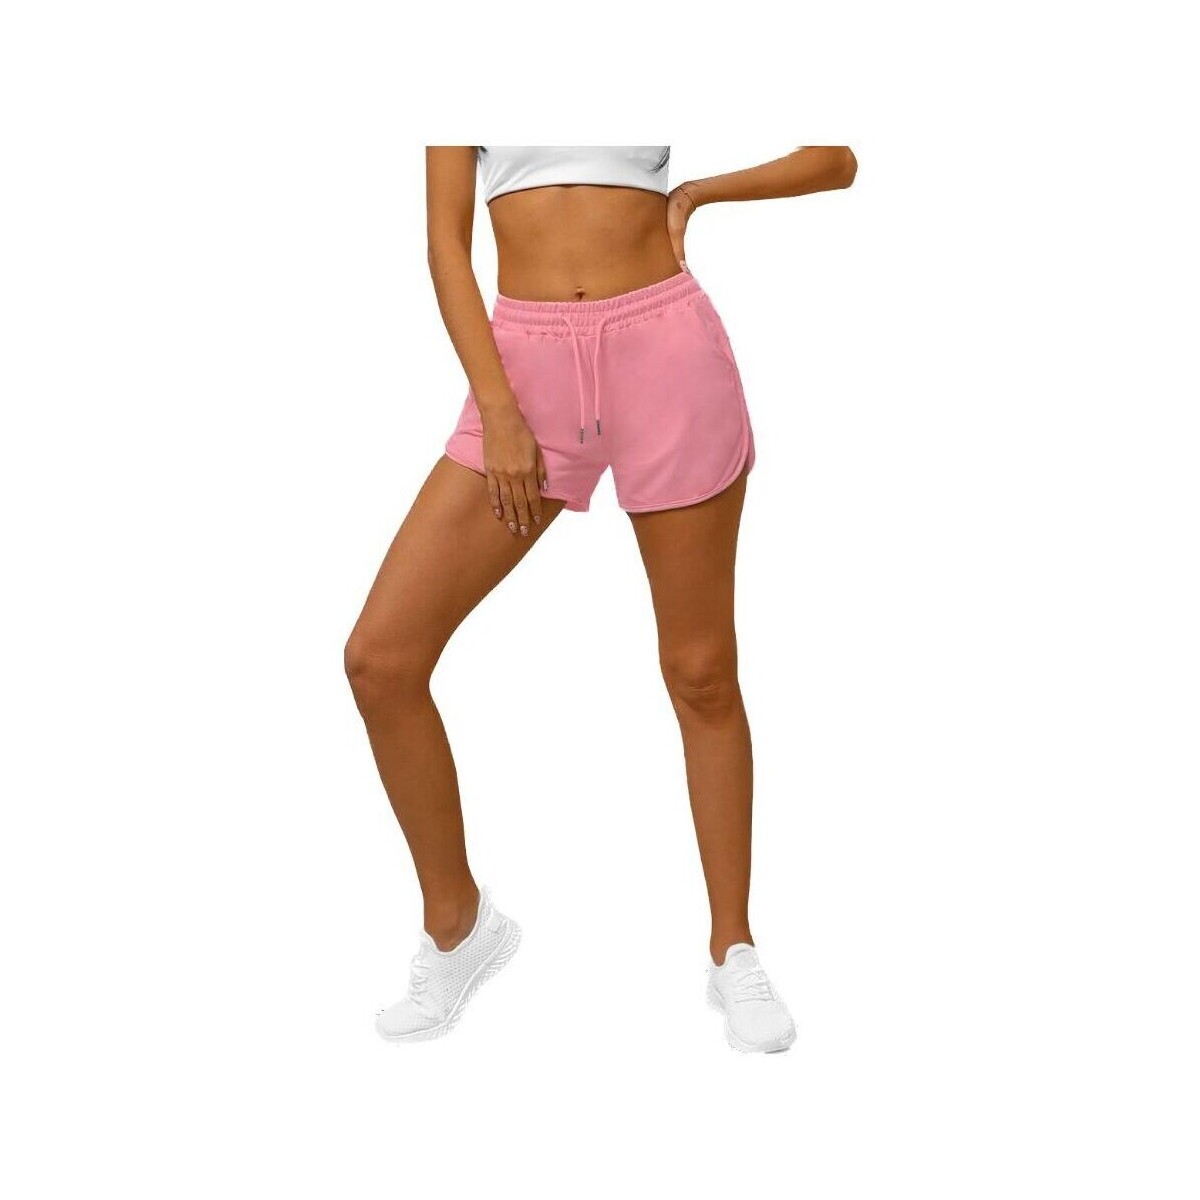 Textil Ženy Kraťasy / Bermudy Ozonee Dámské sportovní šortky Mirahn pudrová růžová Růžová